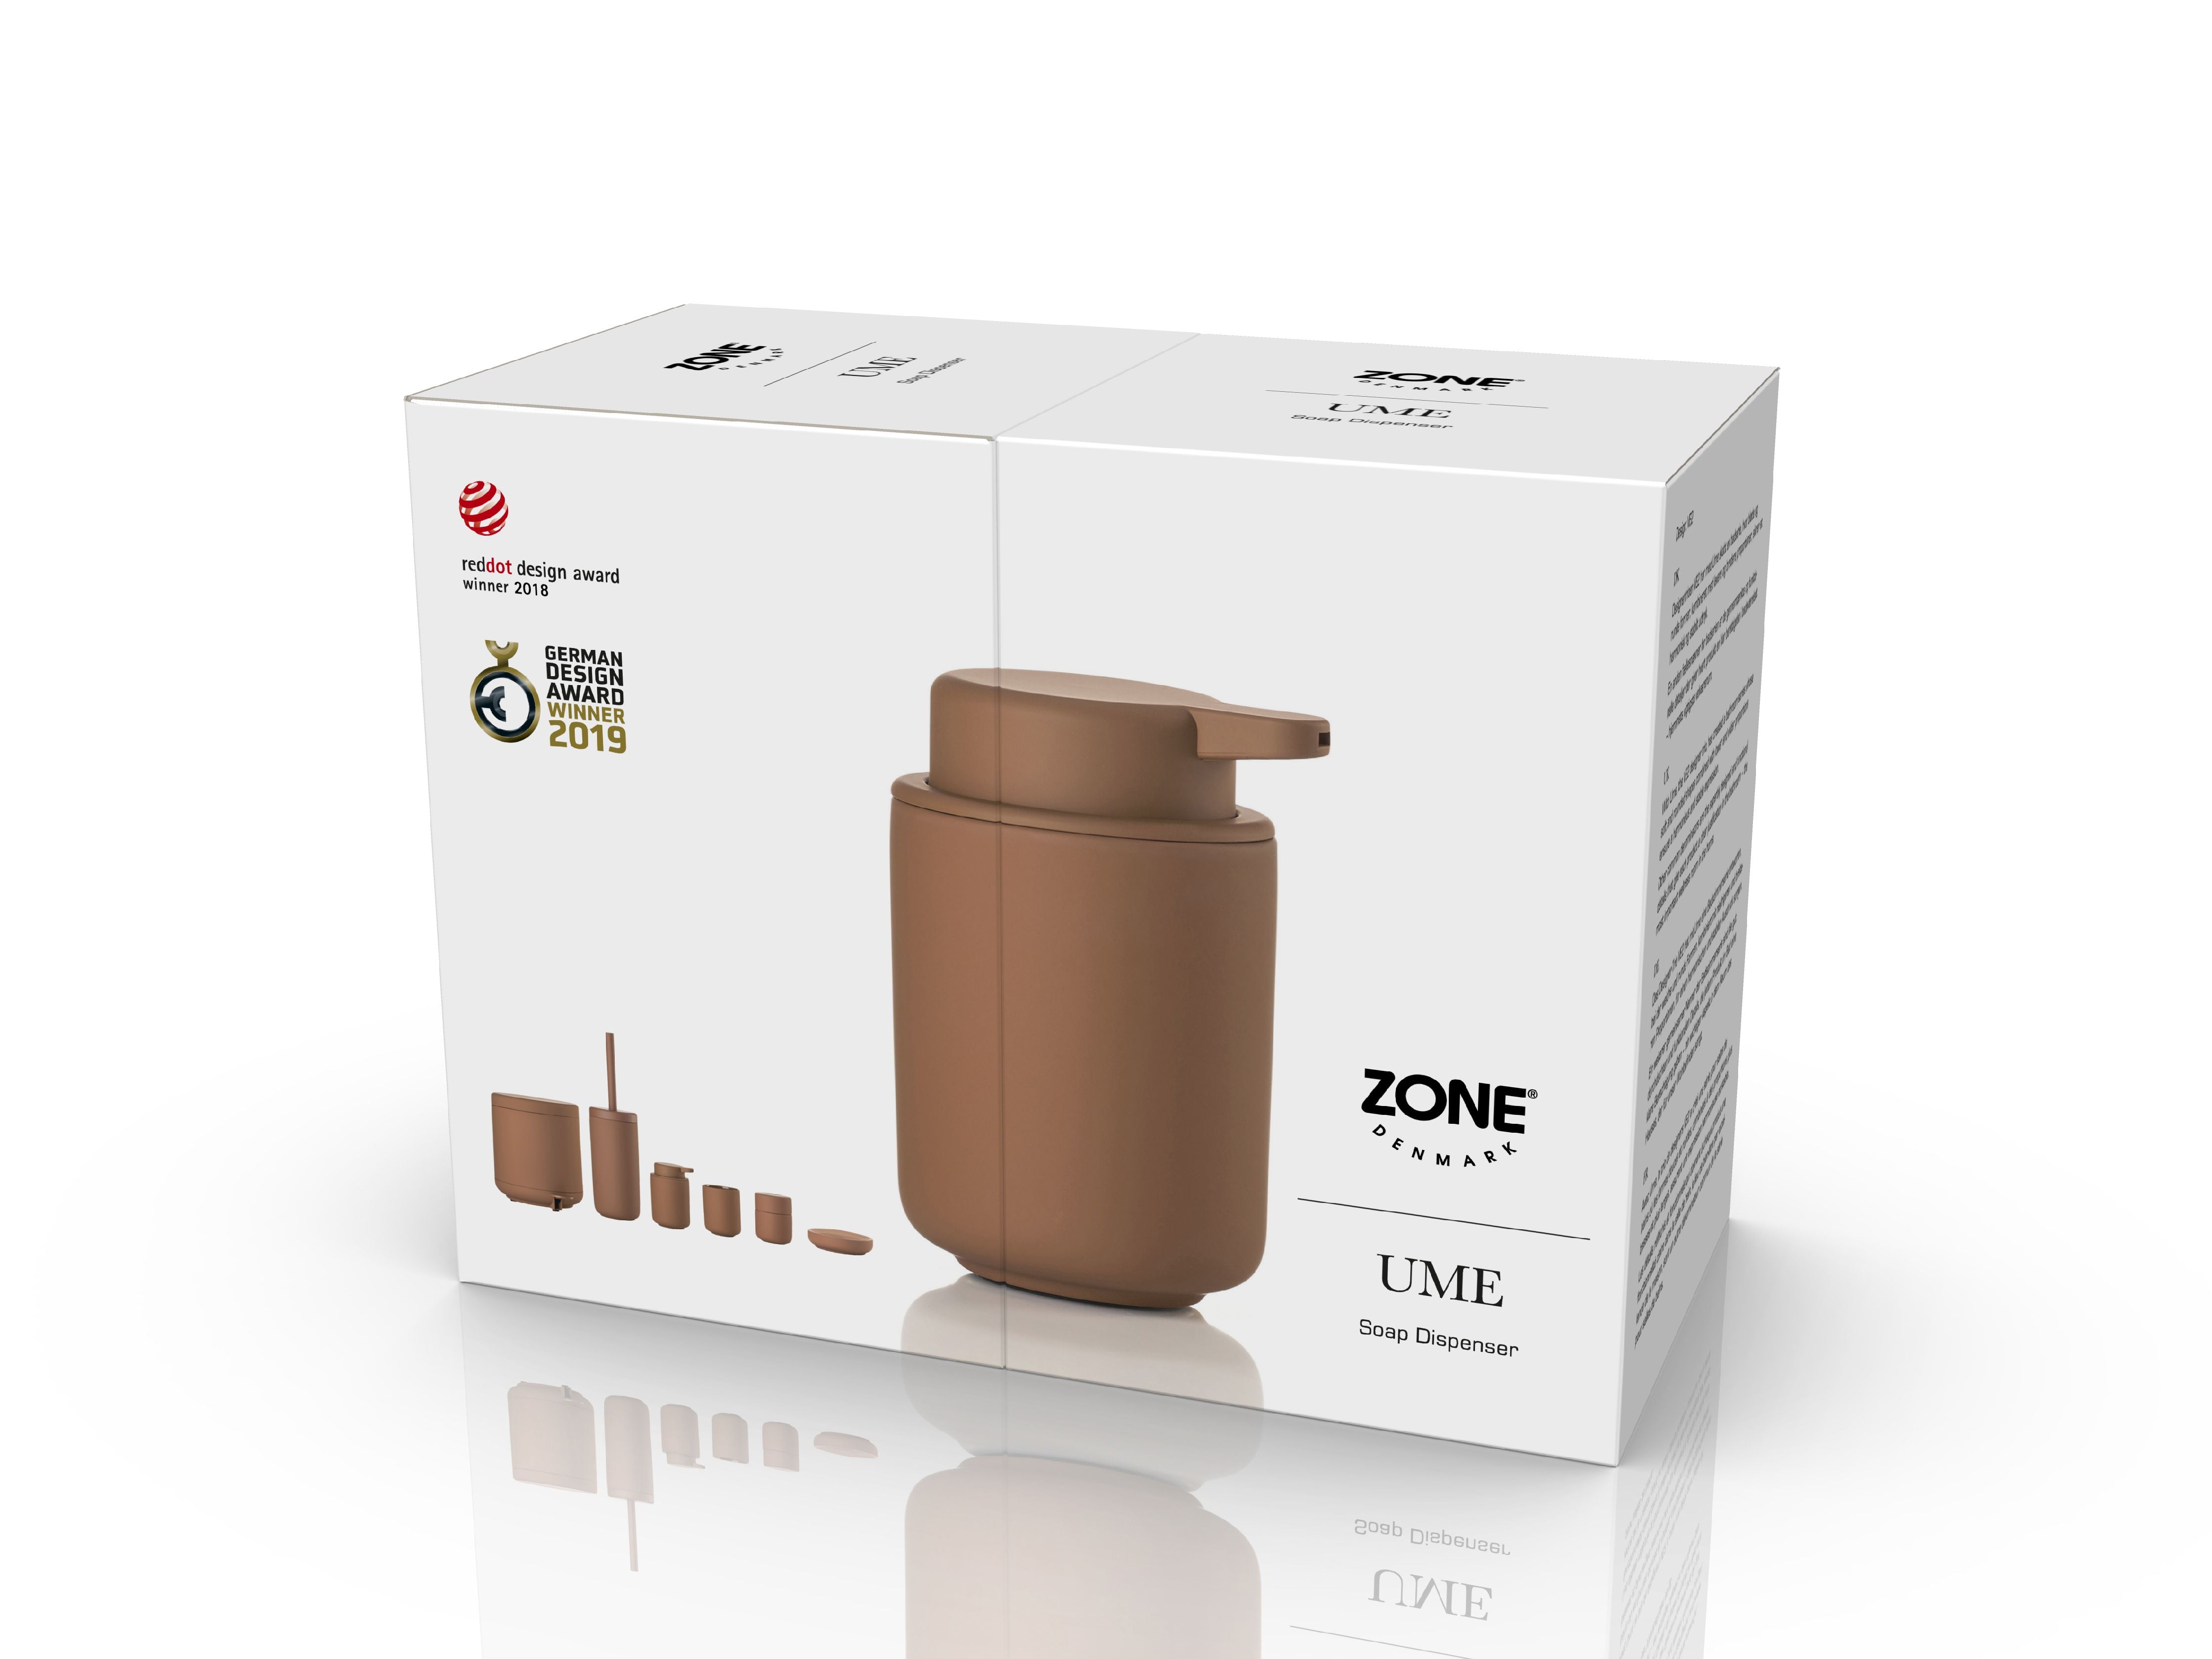 Zone Denemark Ume Soap Dispensver 0,25 litre, terre cuite